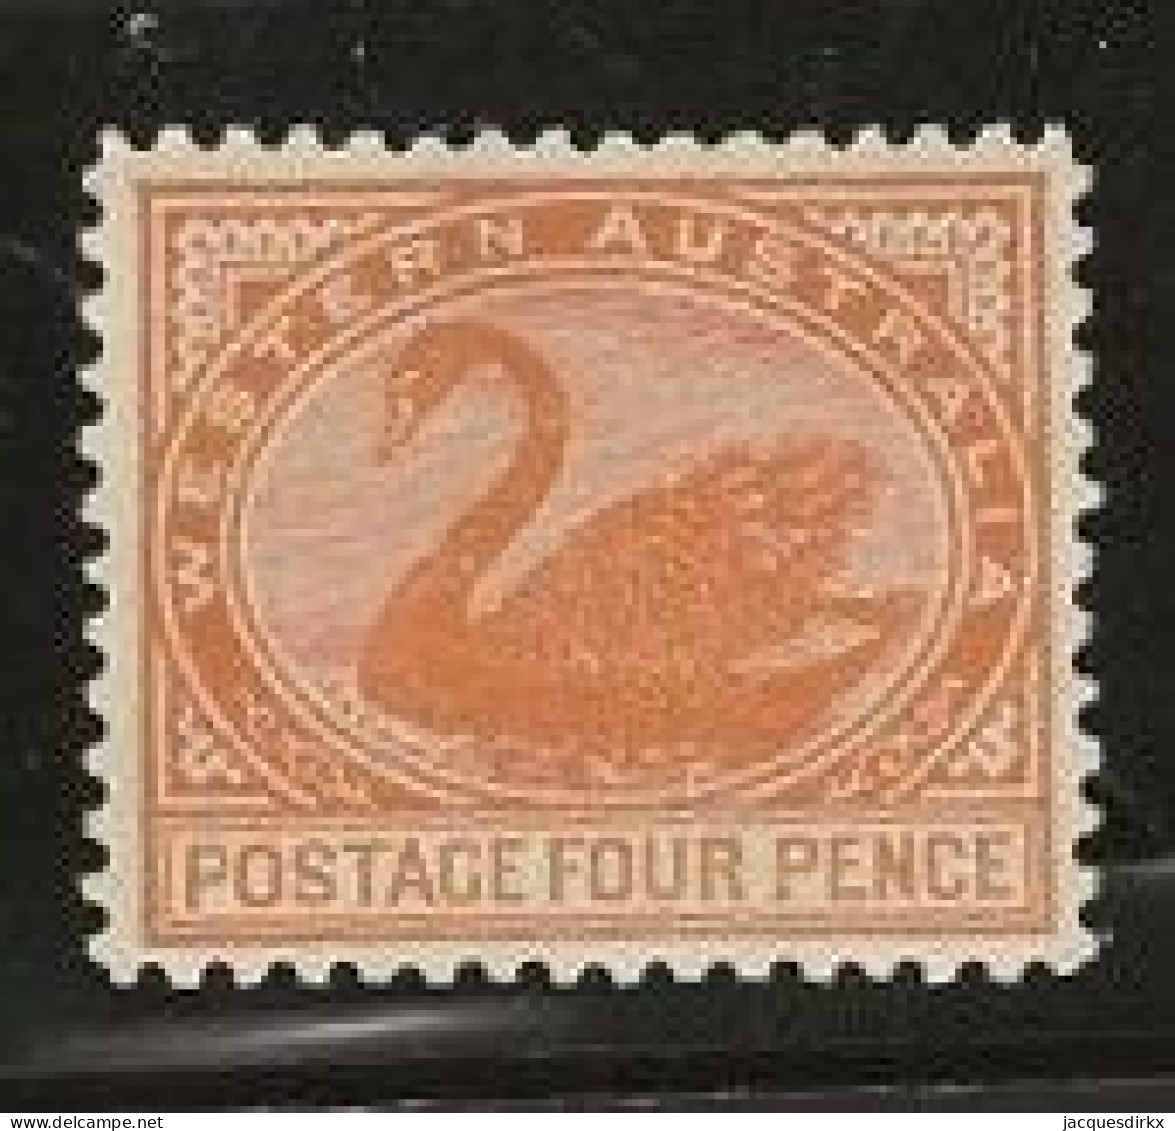 Western Australia     .   SG    .    142b        .   *       .     Mint-hinged - Ongebruikt